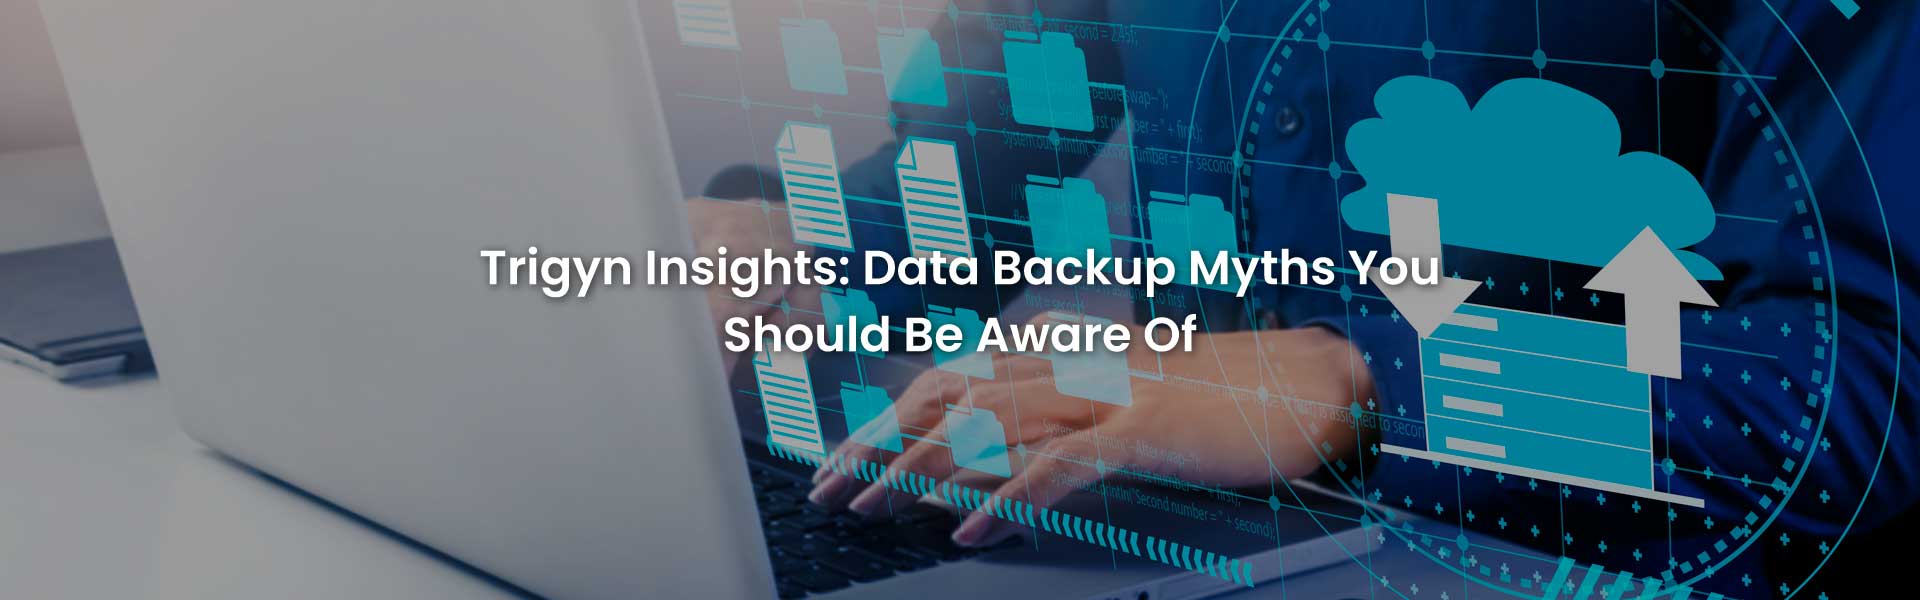 Data Backup Myths You Should Be Aware Of  